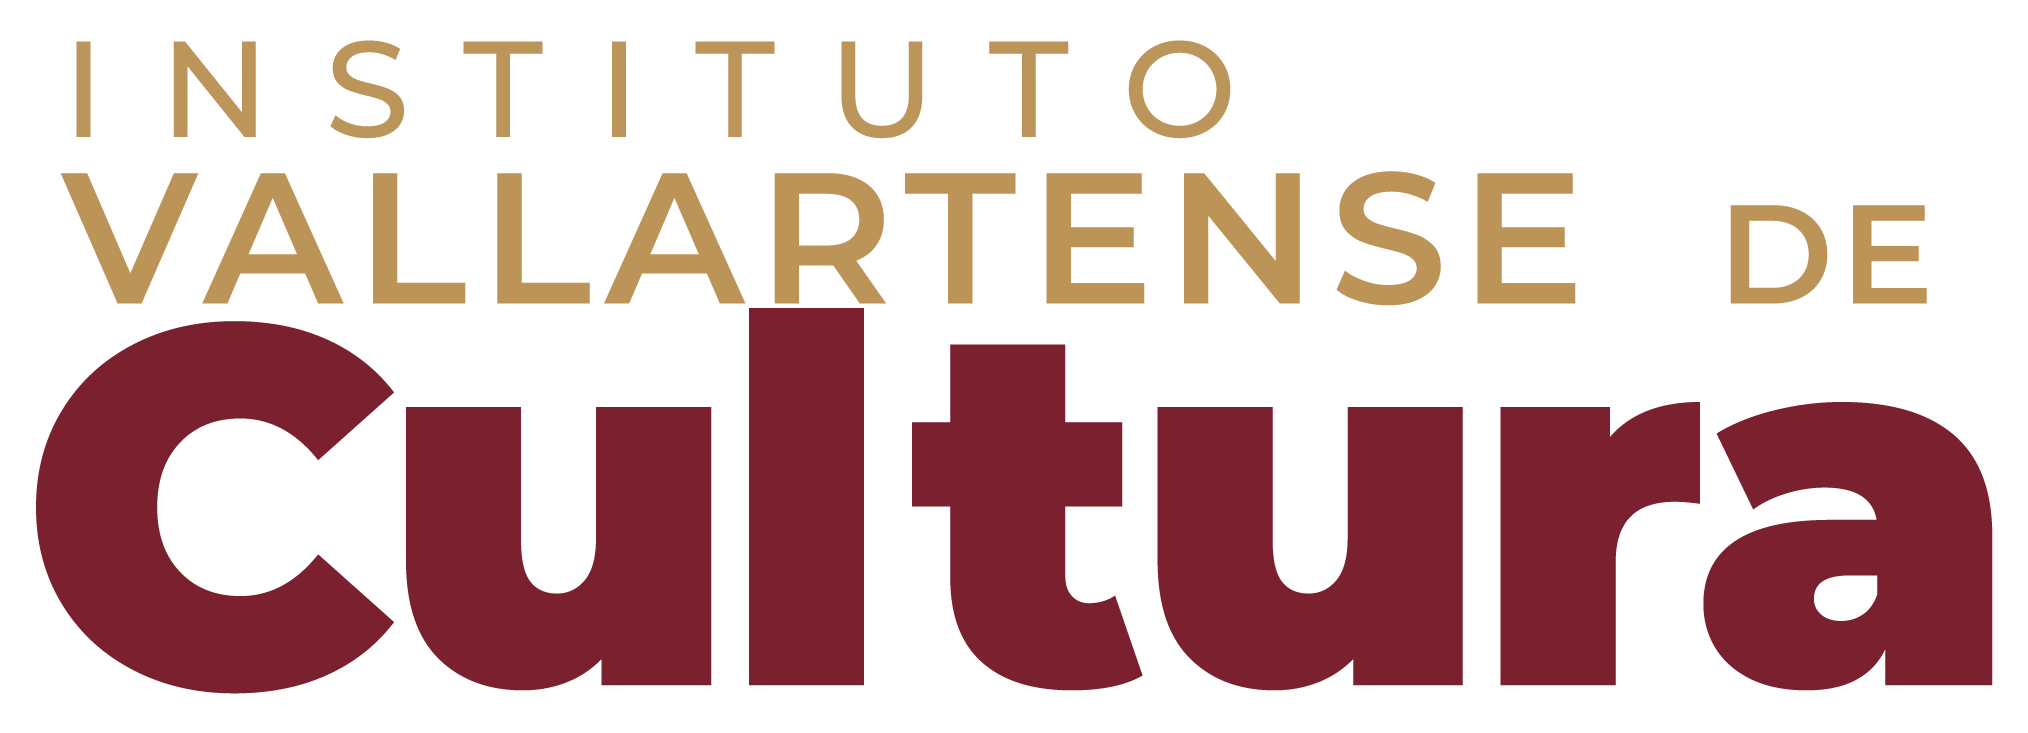 Logo Instituto Vallartense de Cultura